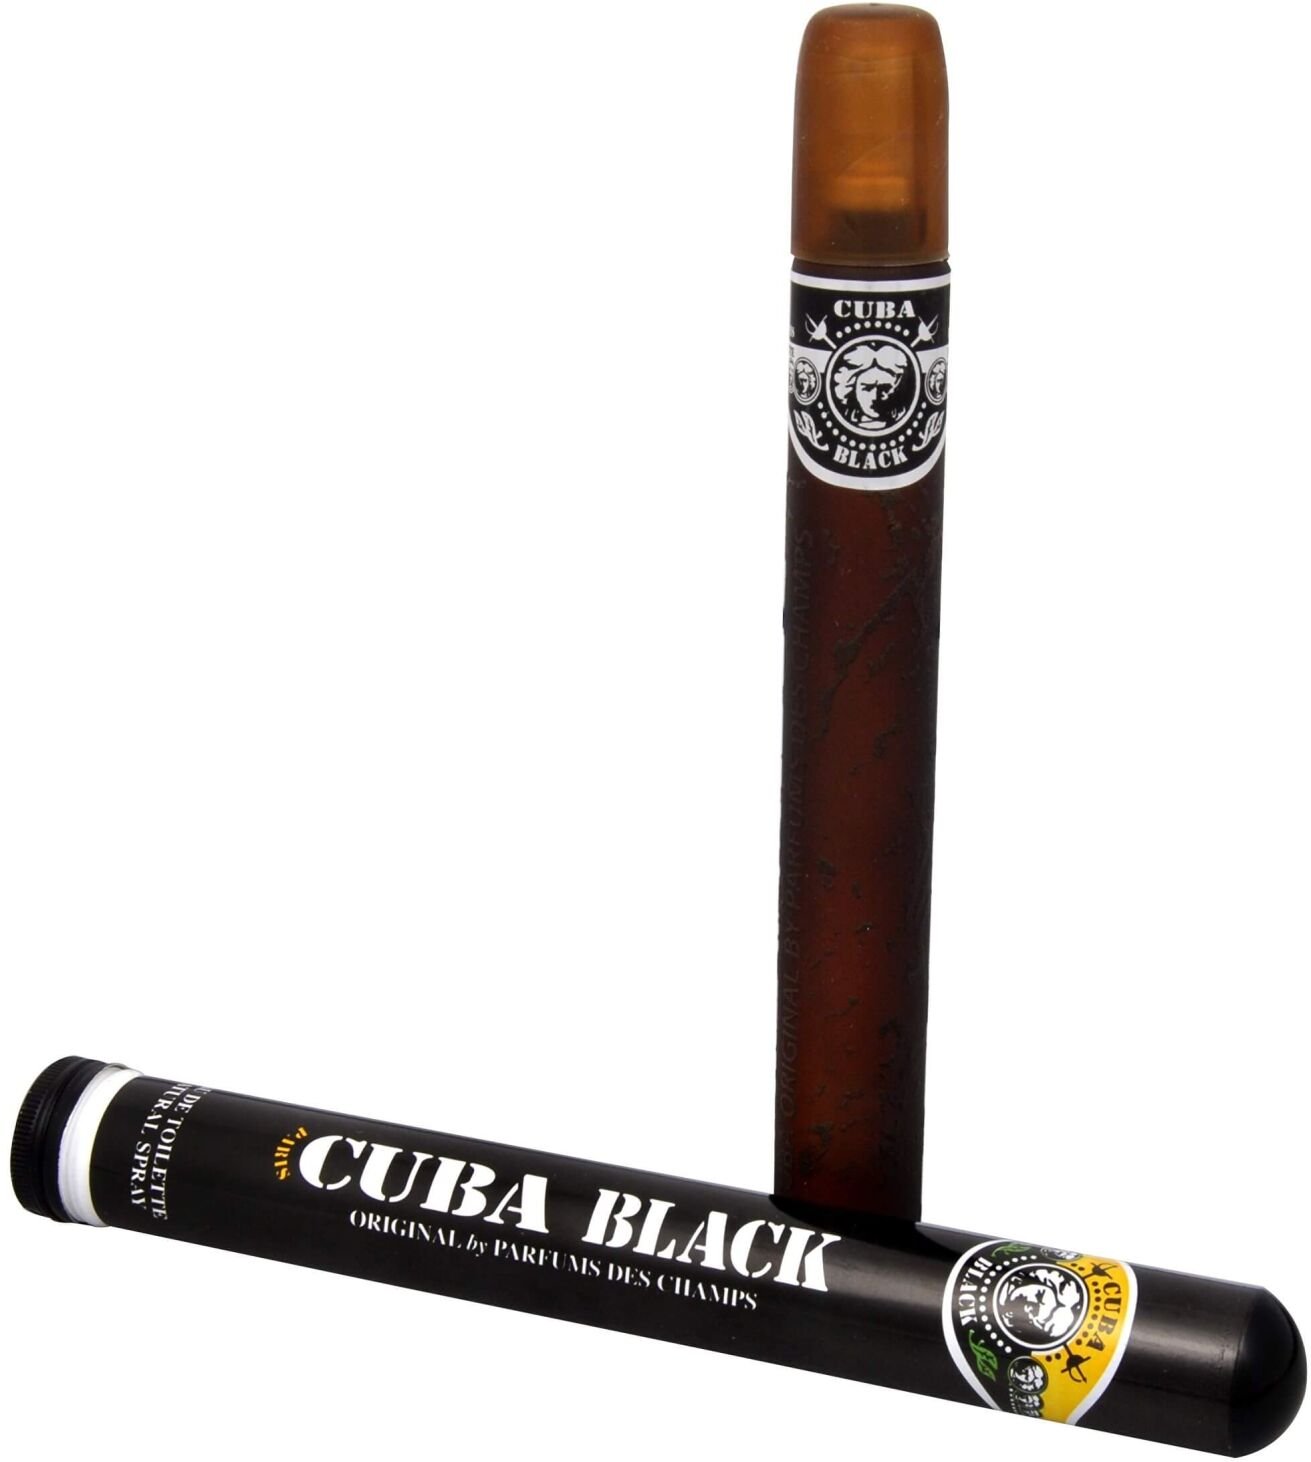 Cuba Black - EDT 35 ml